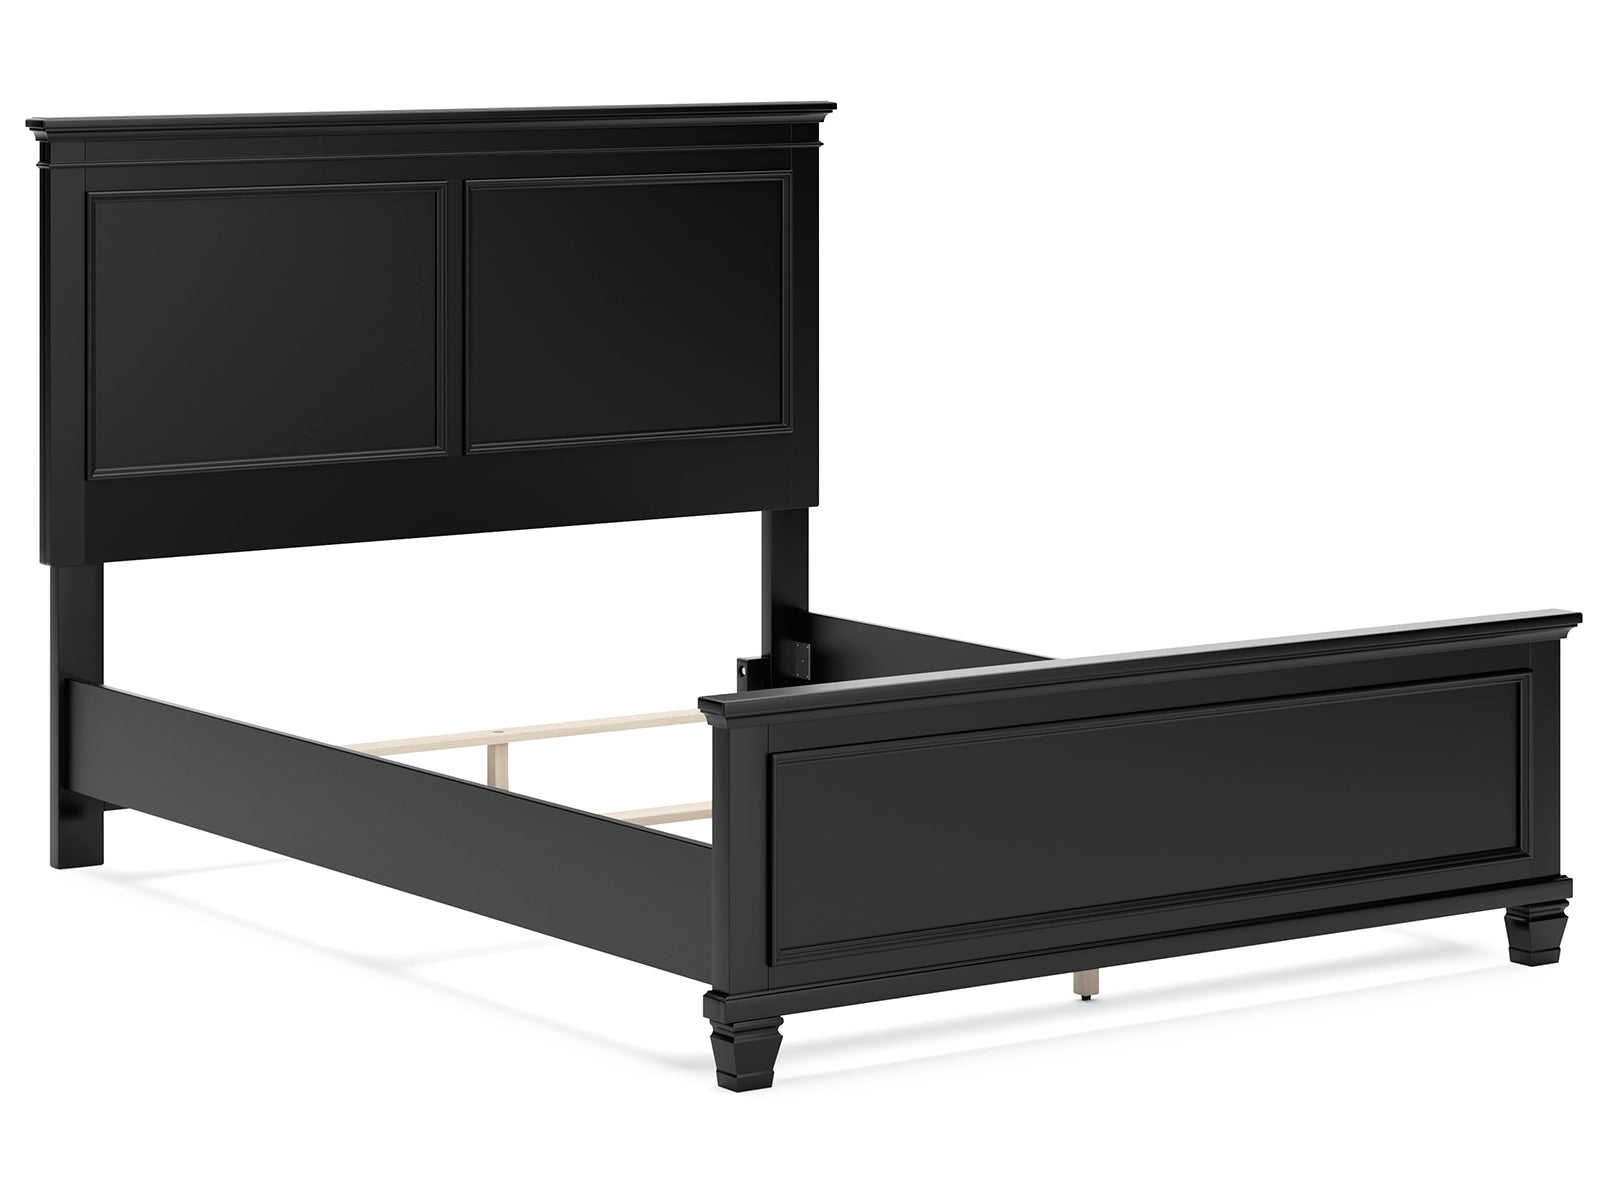 Lanolee Queen Panel Bed with Mirrored Dresser, Chest and 2 Nightstands